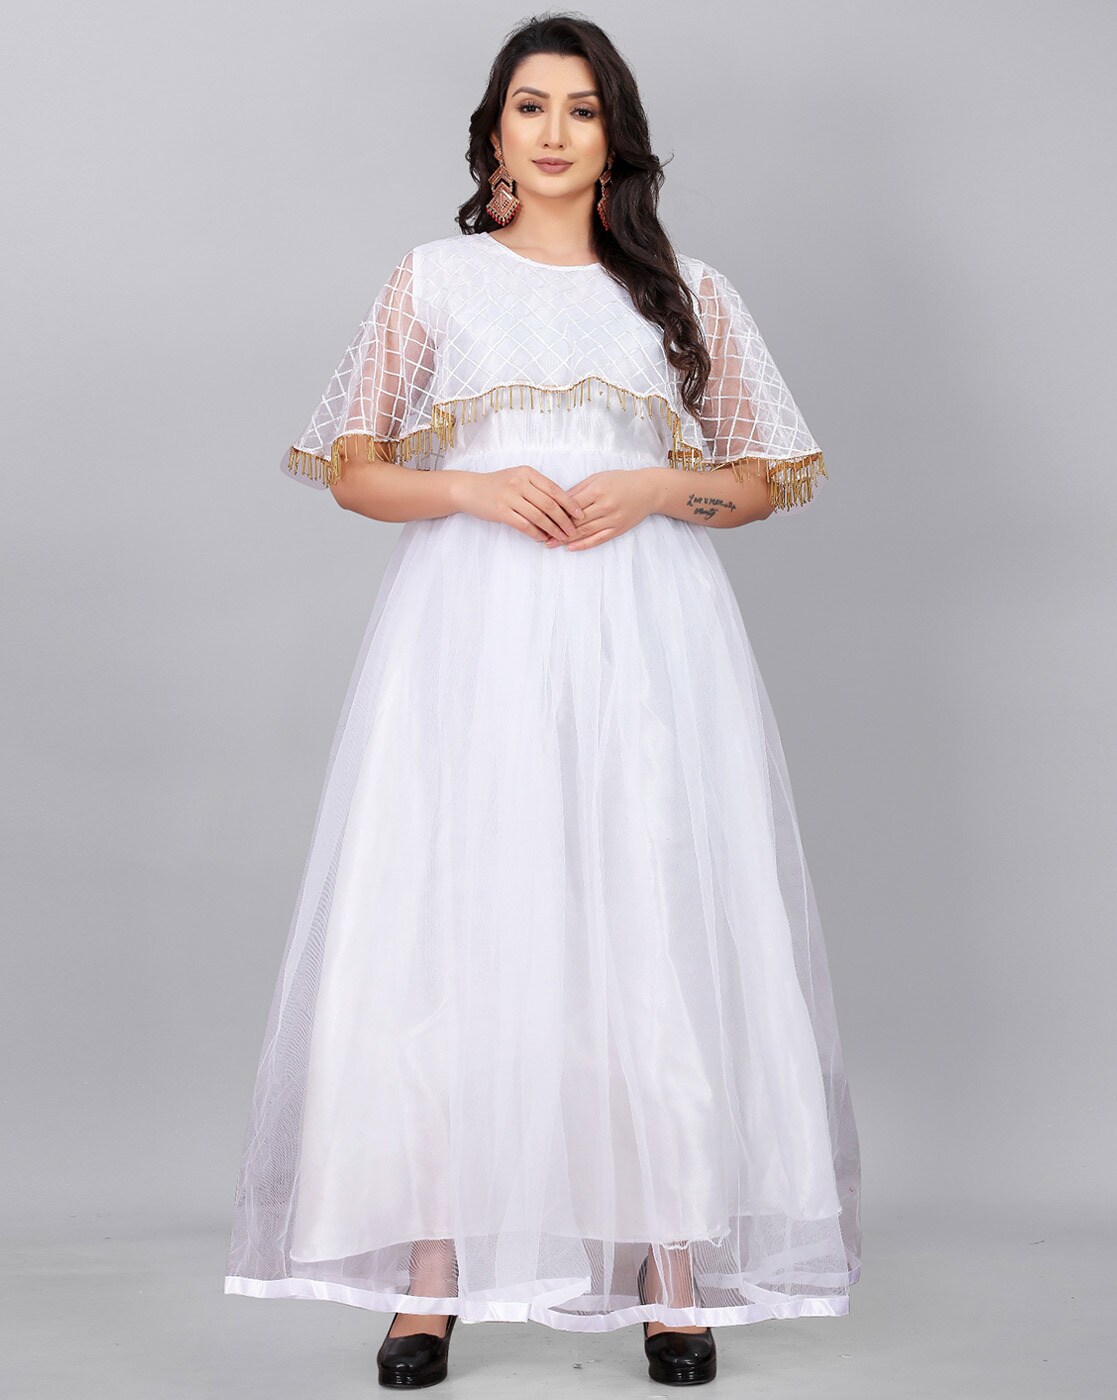 kids white luxury wedding dress bridal| Alibaba.com